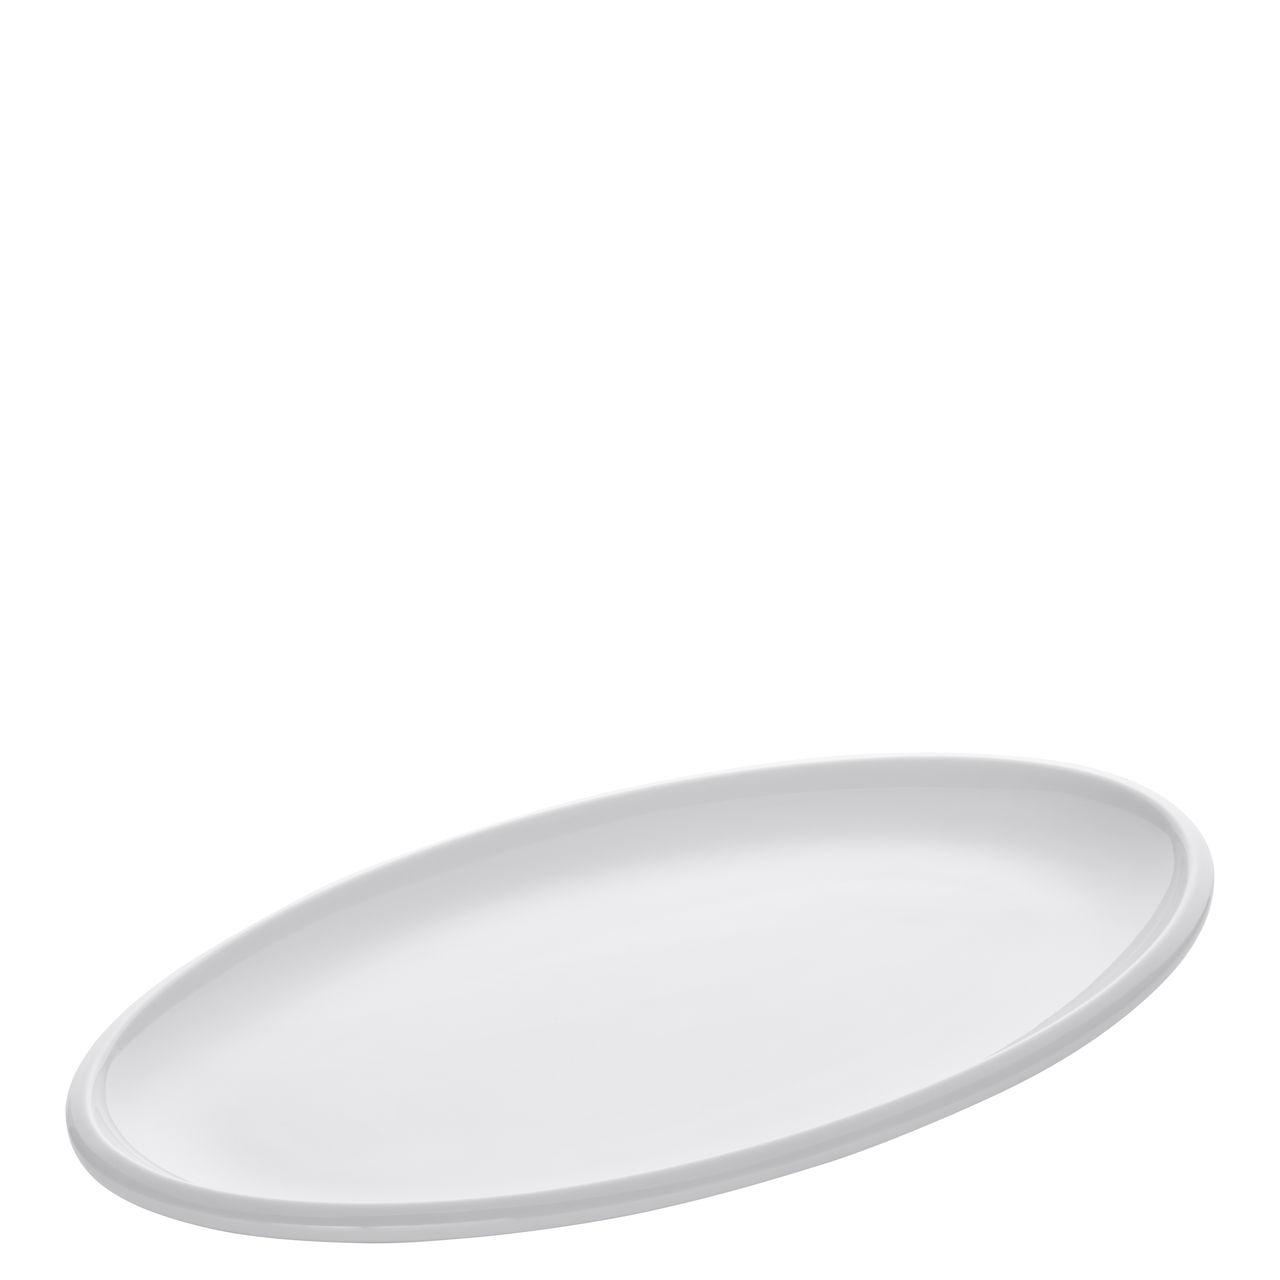 Platter oval 29 x 16 cm SYNERGY